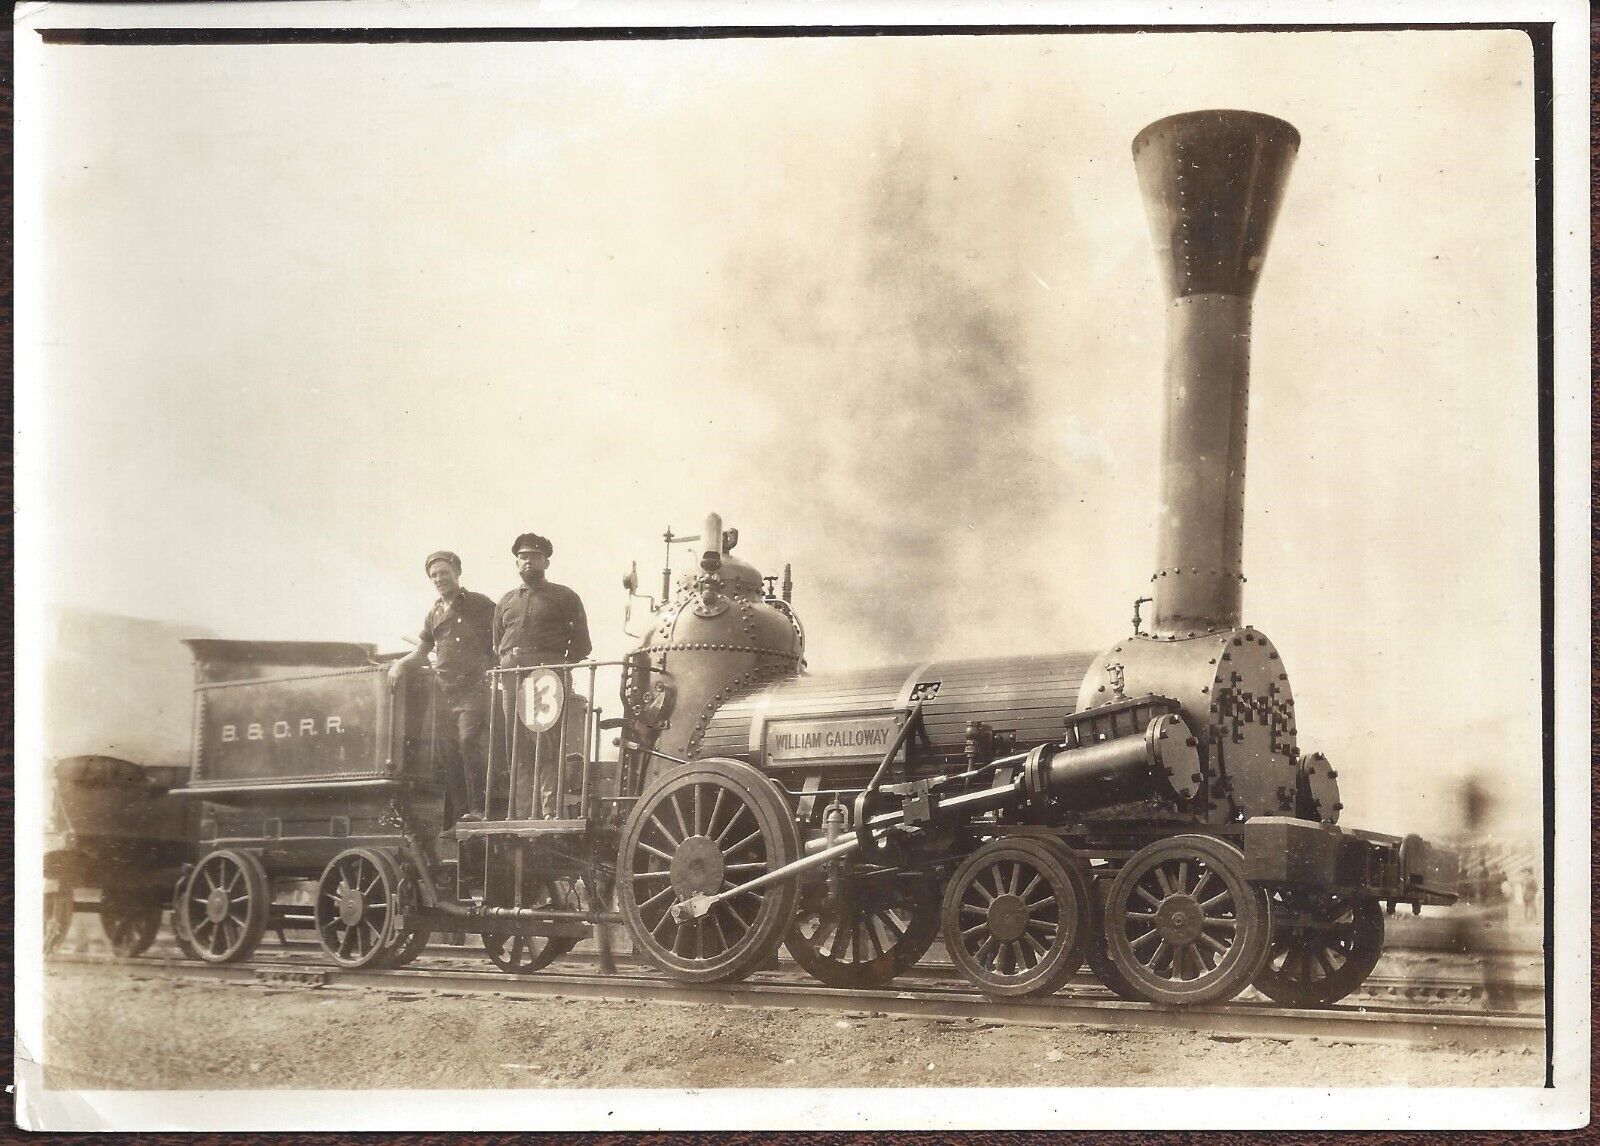 Vintage Photo William Galloway Steam Engine Baltimore & Ohio Railroad